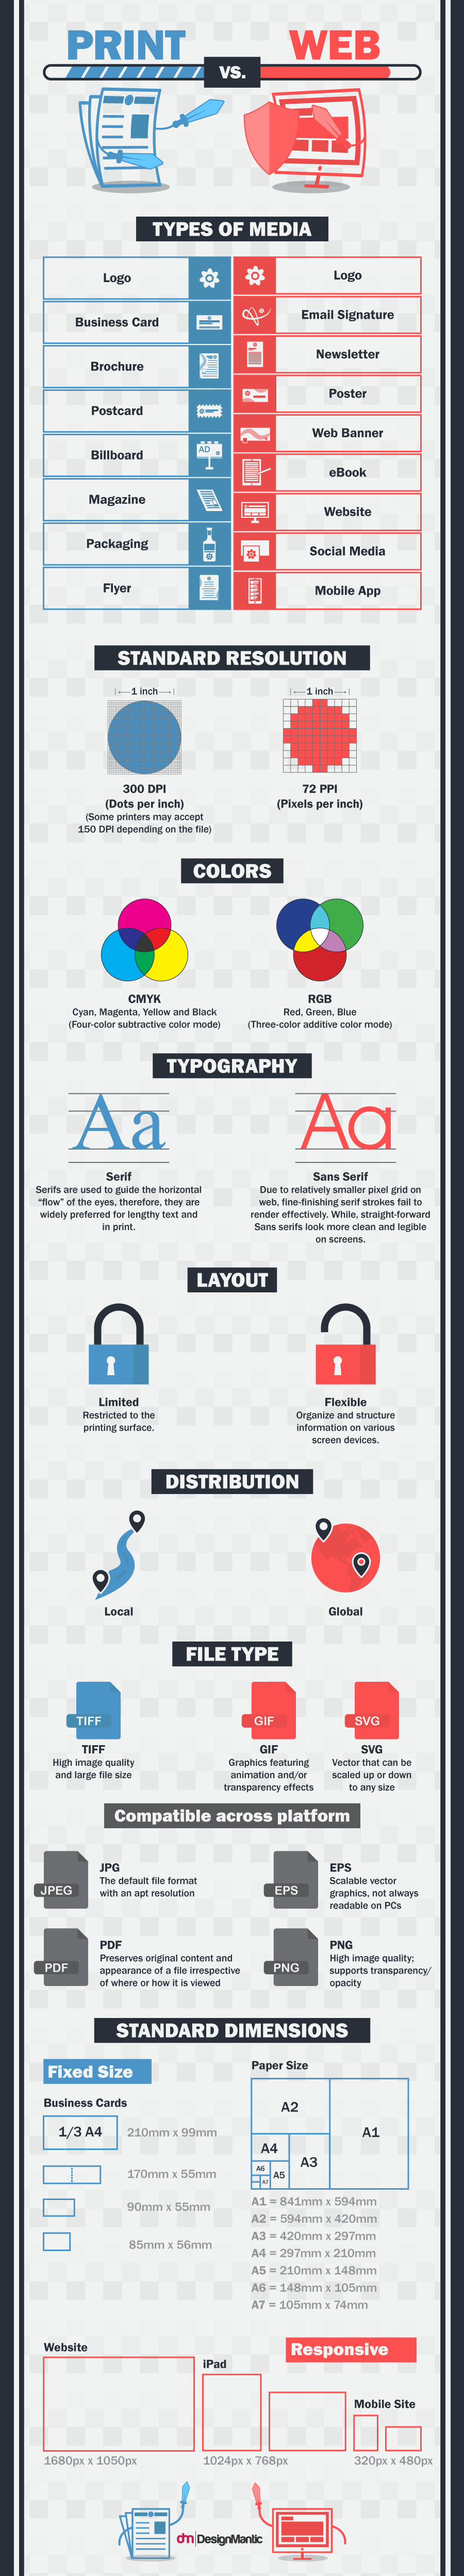 Print Design vs. Web Design: What Makes Them Different?